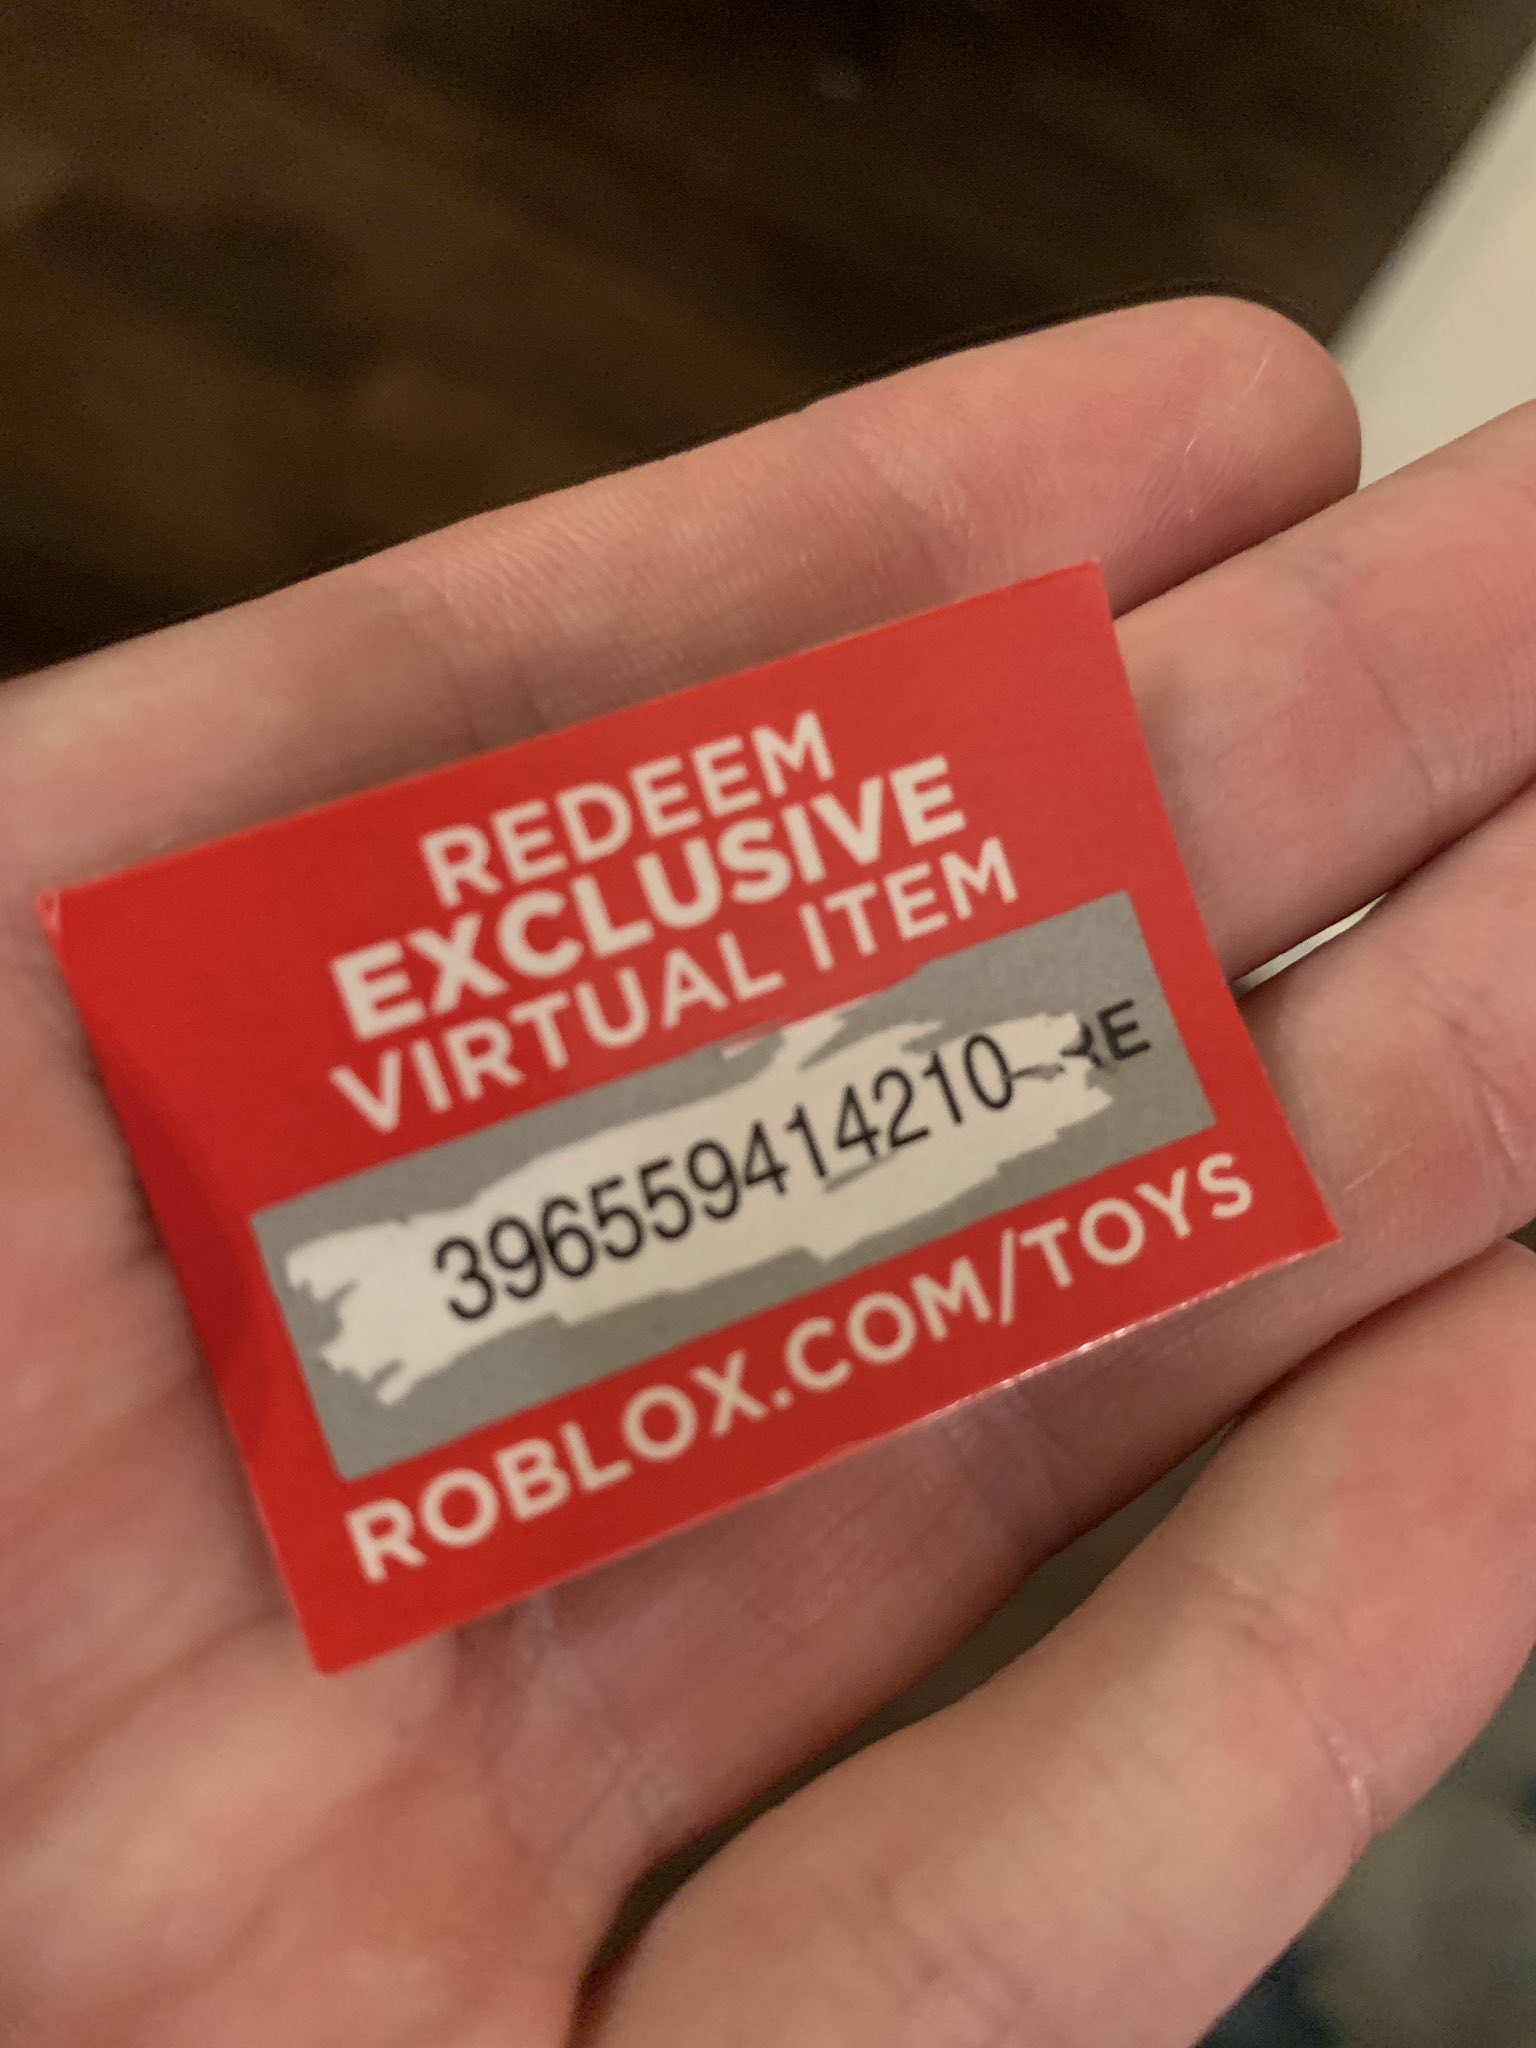 Roblox Virtual Item Codes